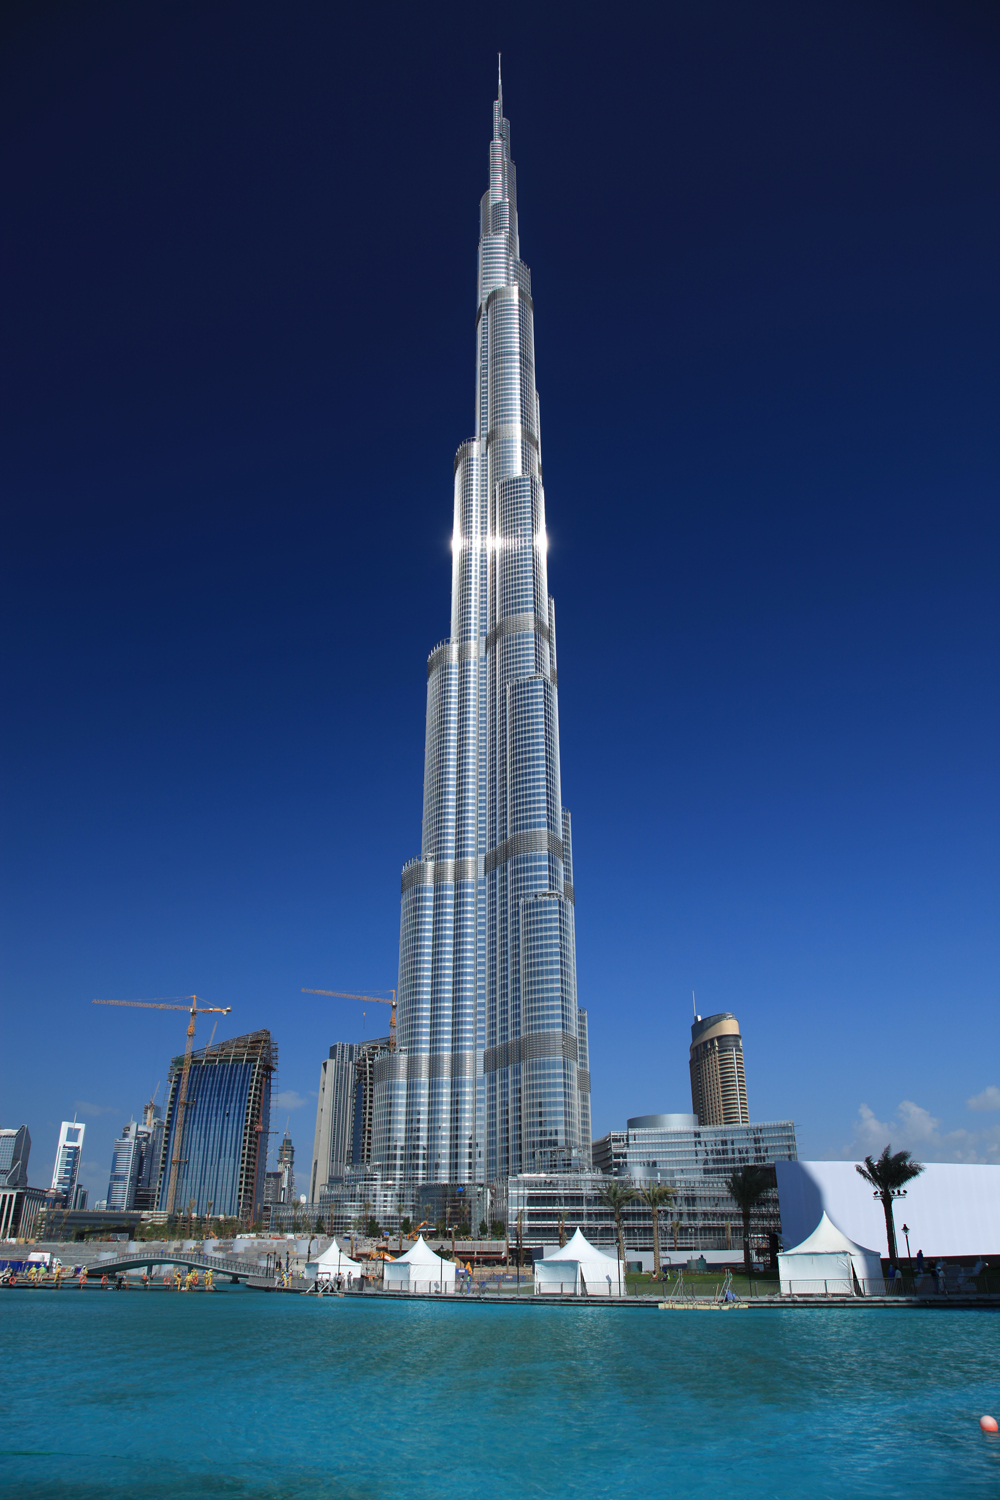 Desert Safari Dubai And Dhow Cruise Dubai Blog: About Burj Khalifa